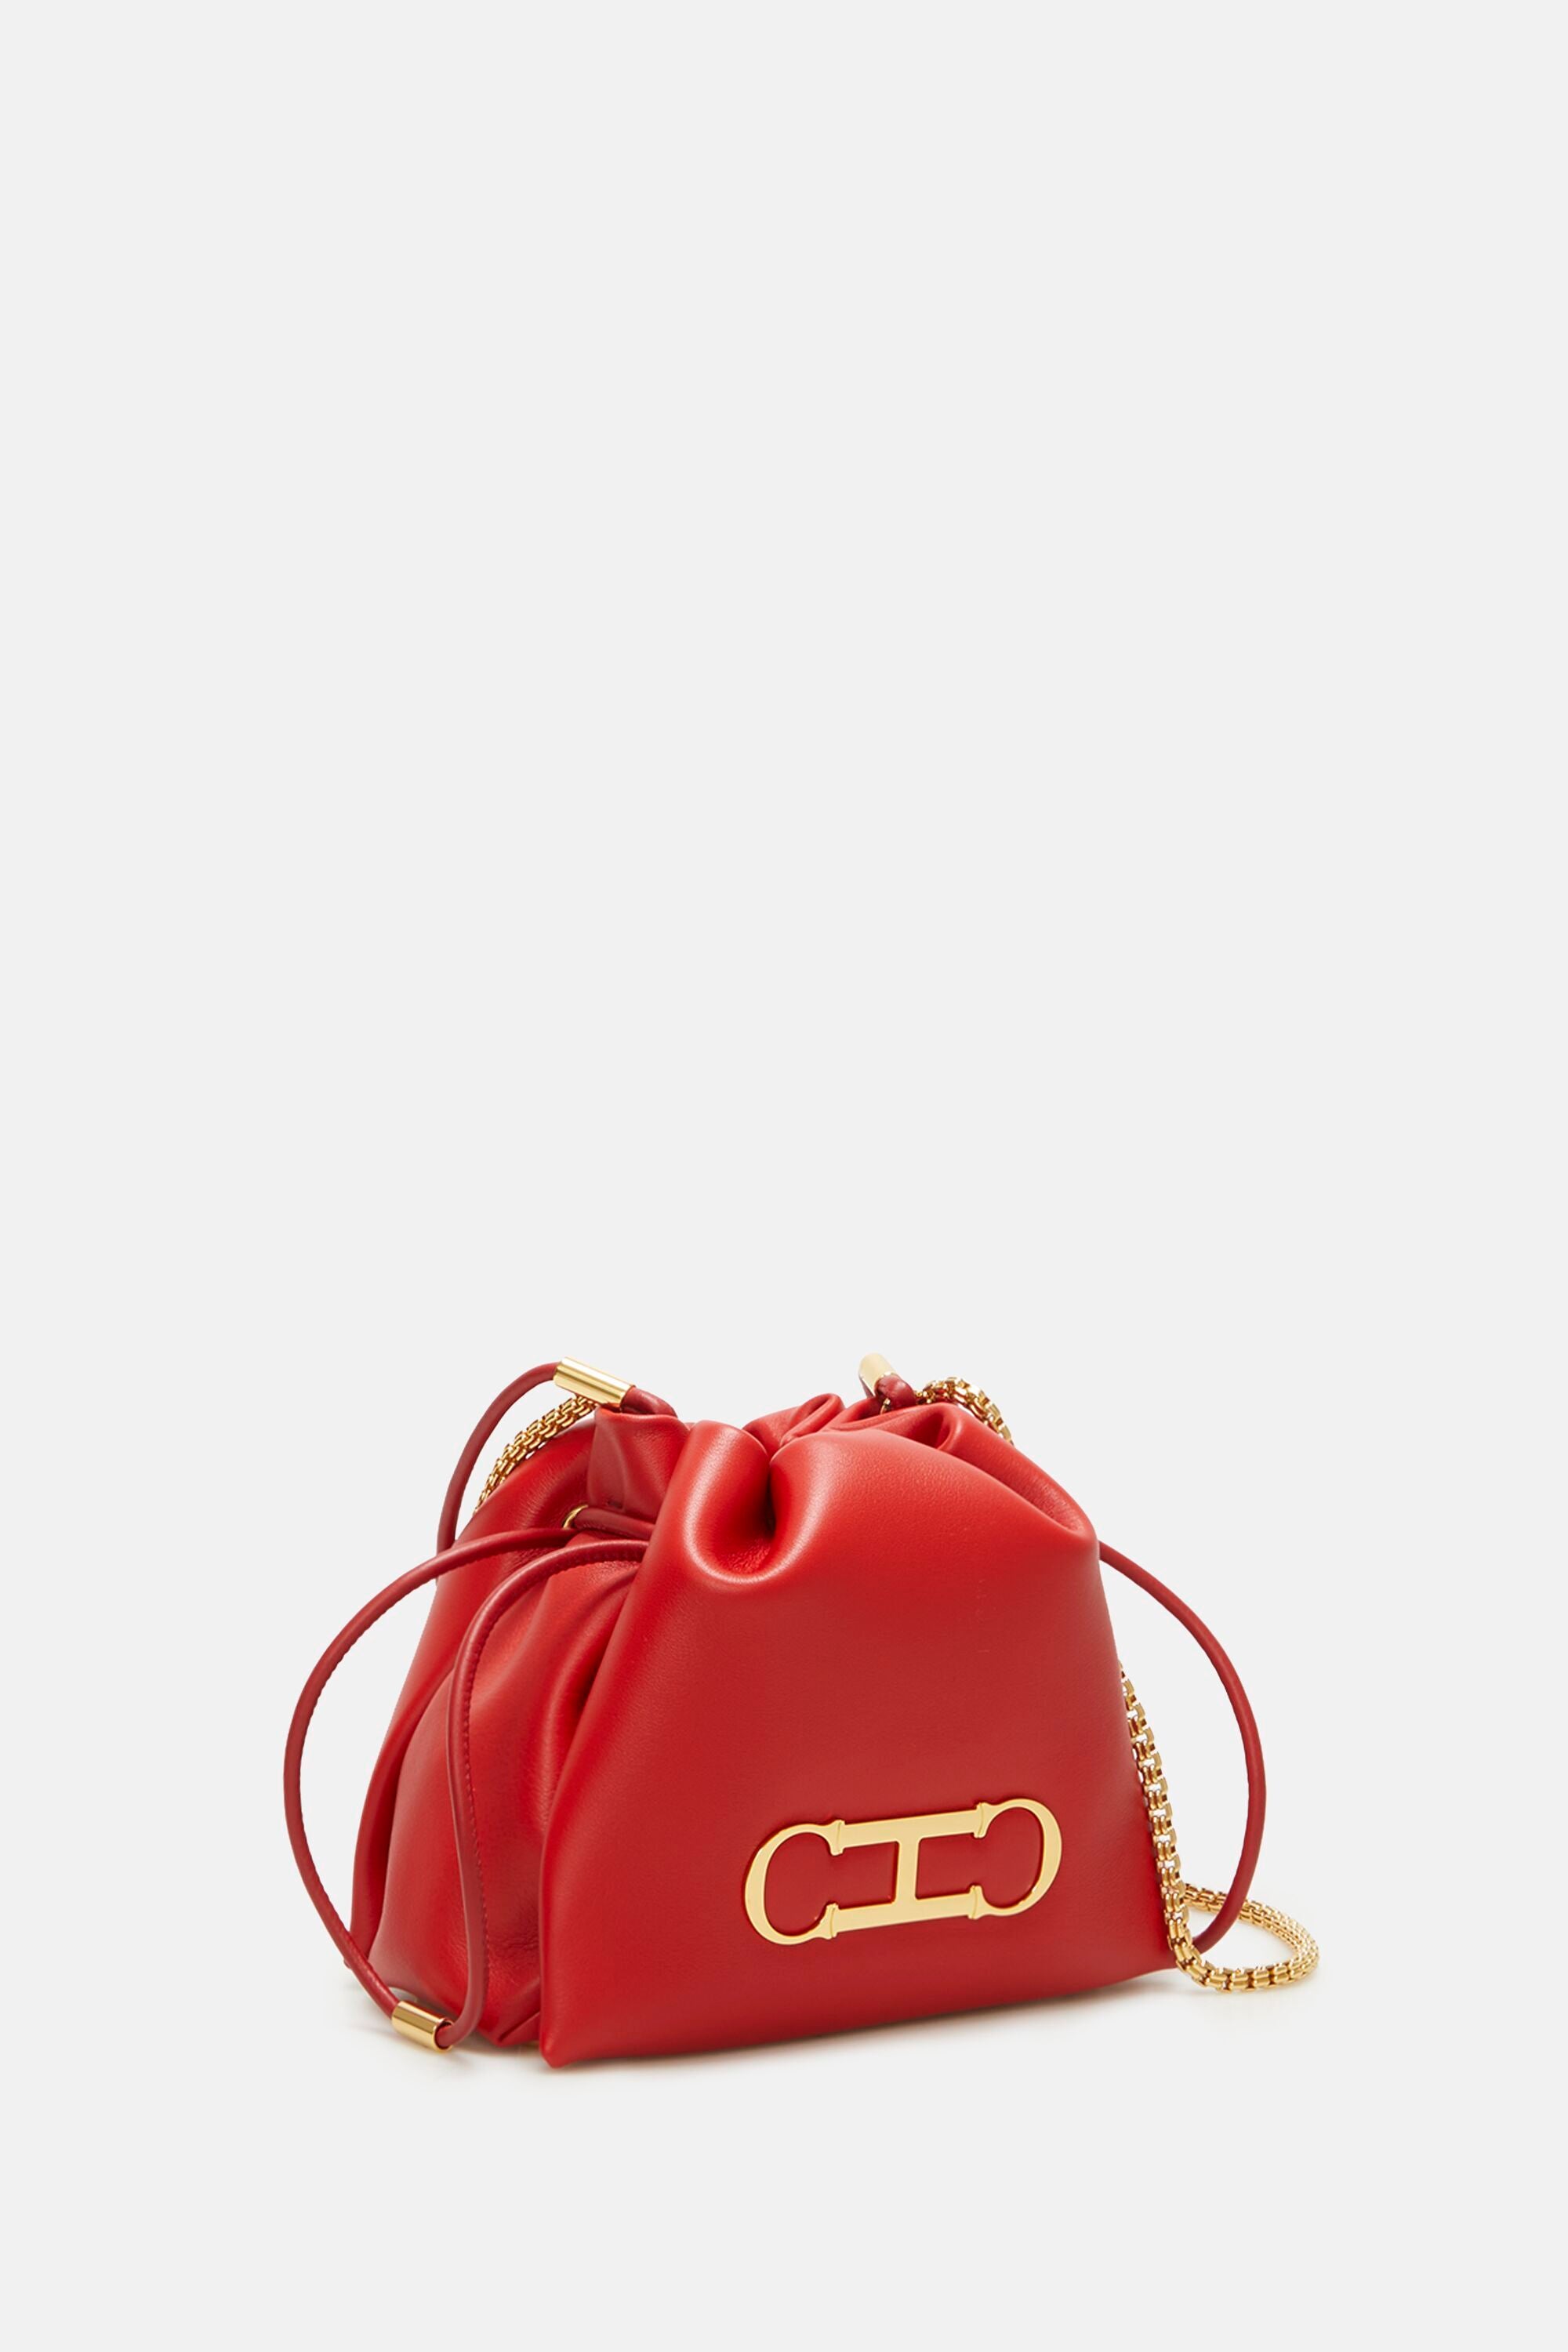 Carolina Herrera, Bags, Carolina Herrera Initial Insignia Red Medium Size